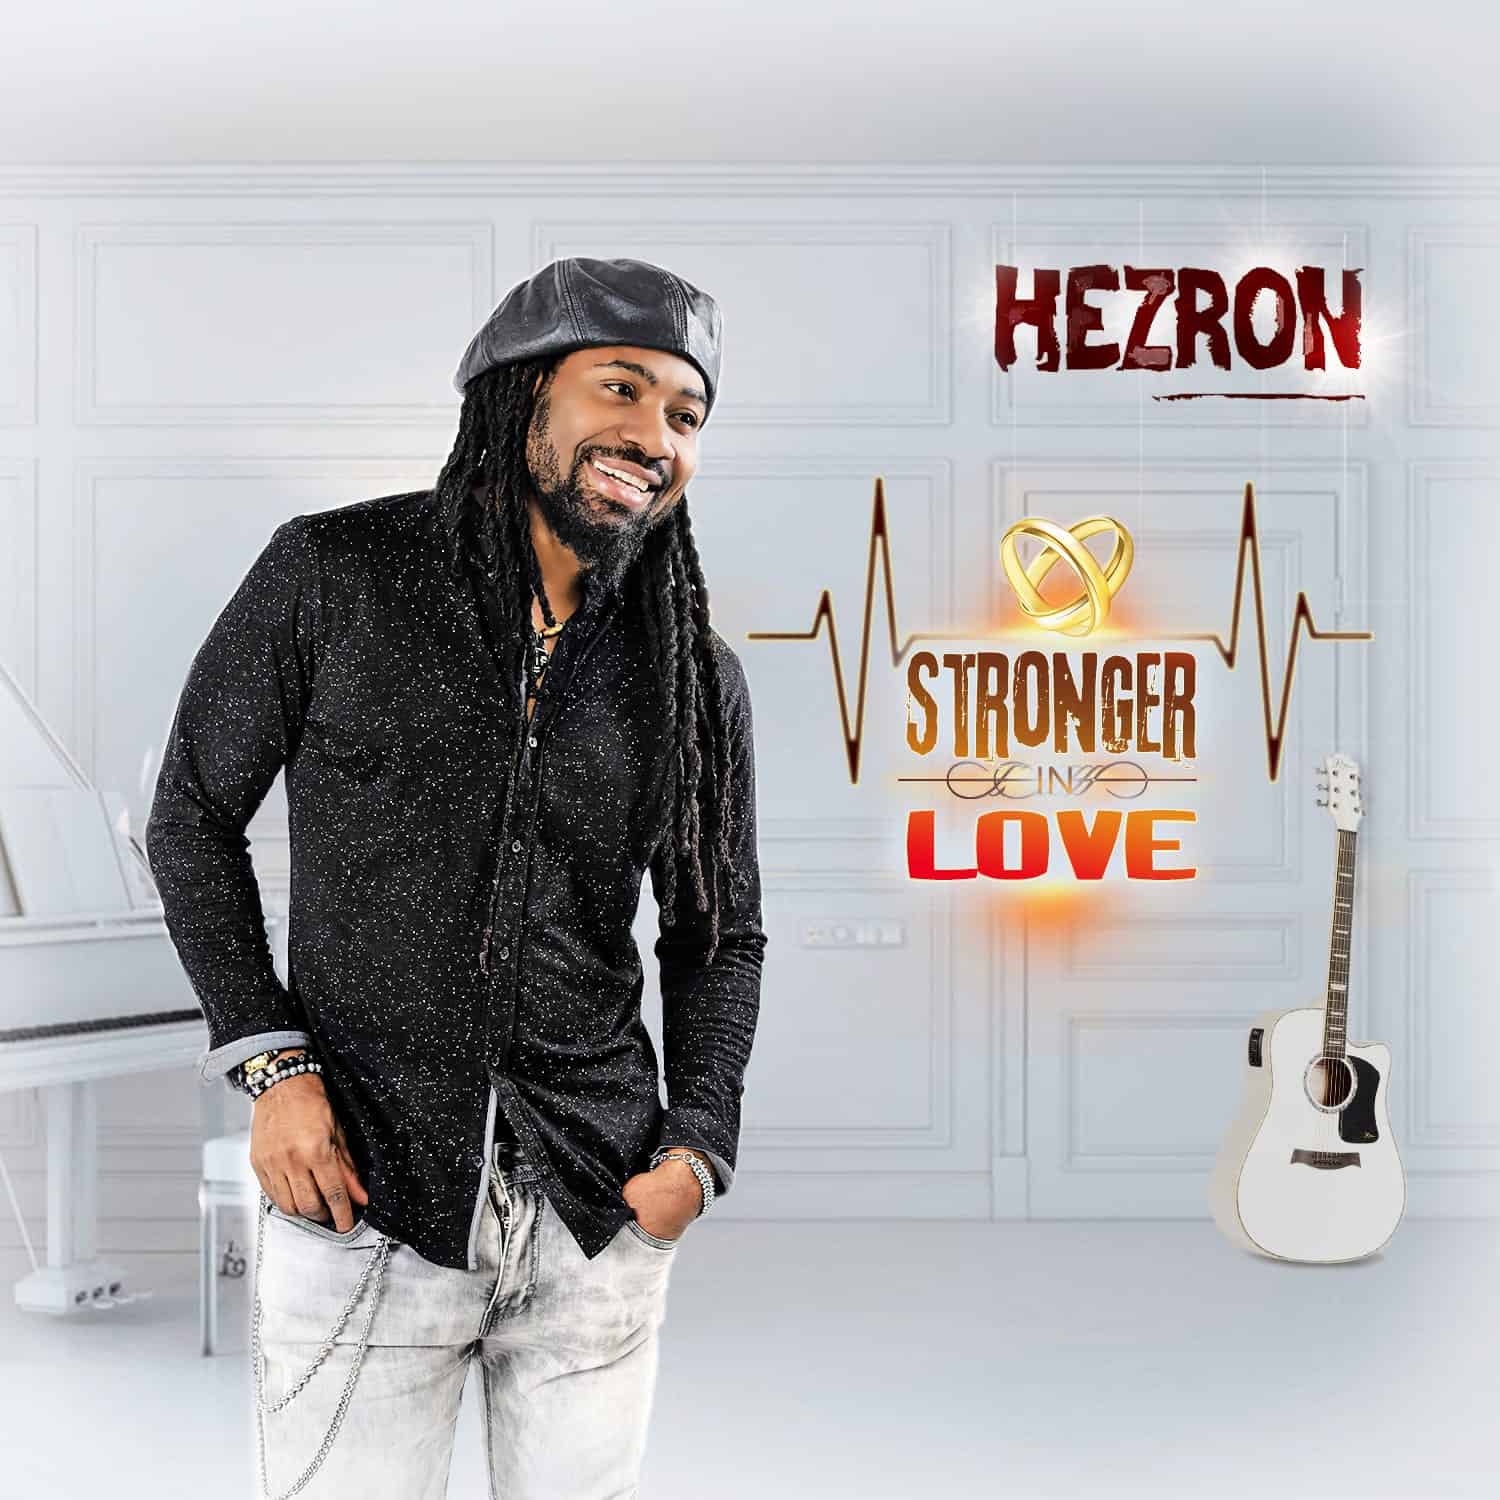 Hezron - Stronger In Love - Hardshield Records